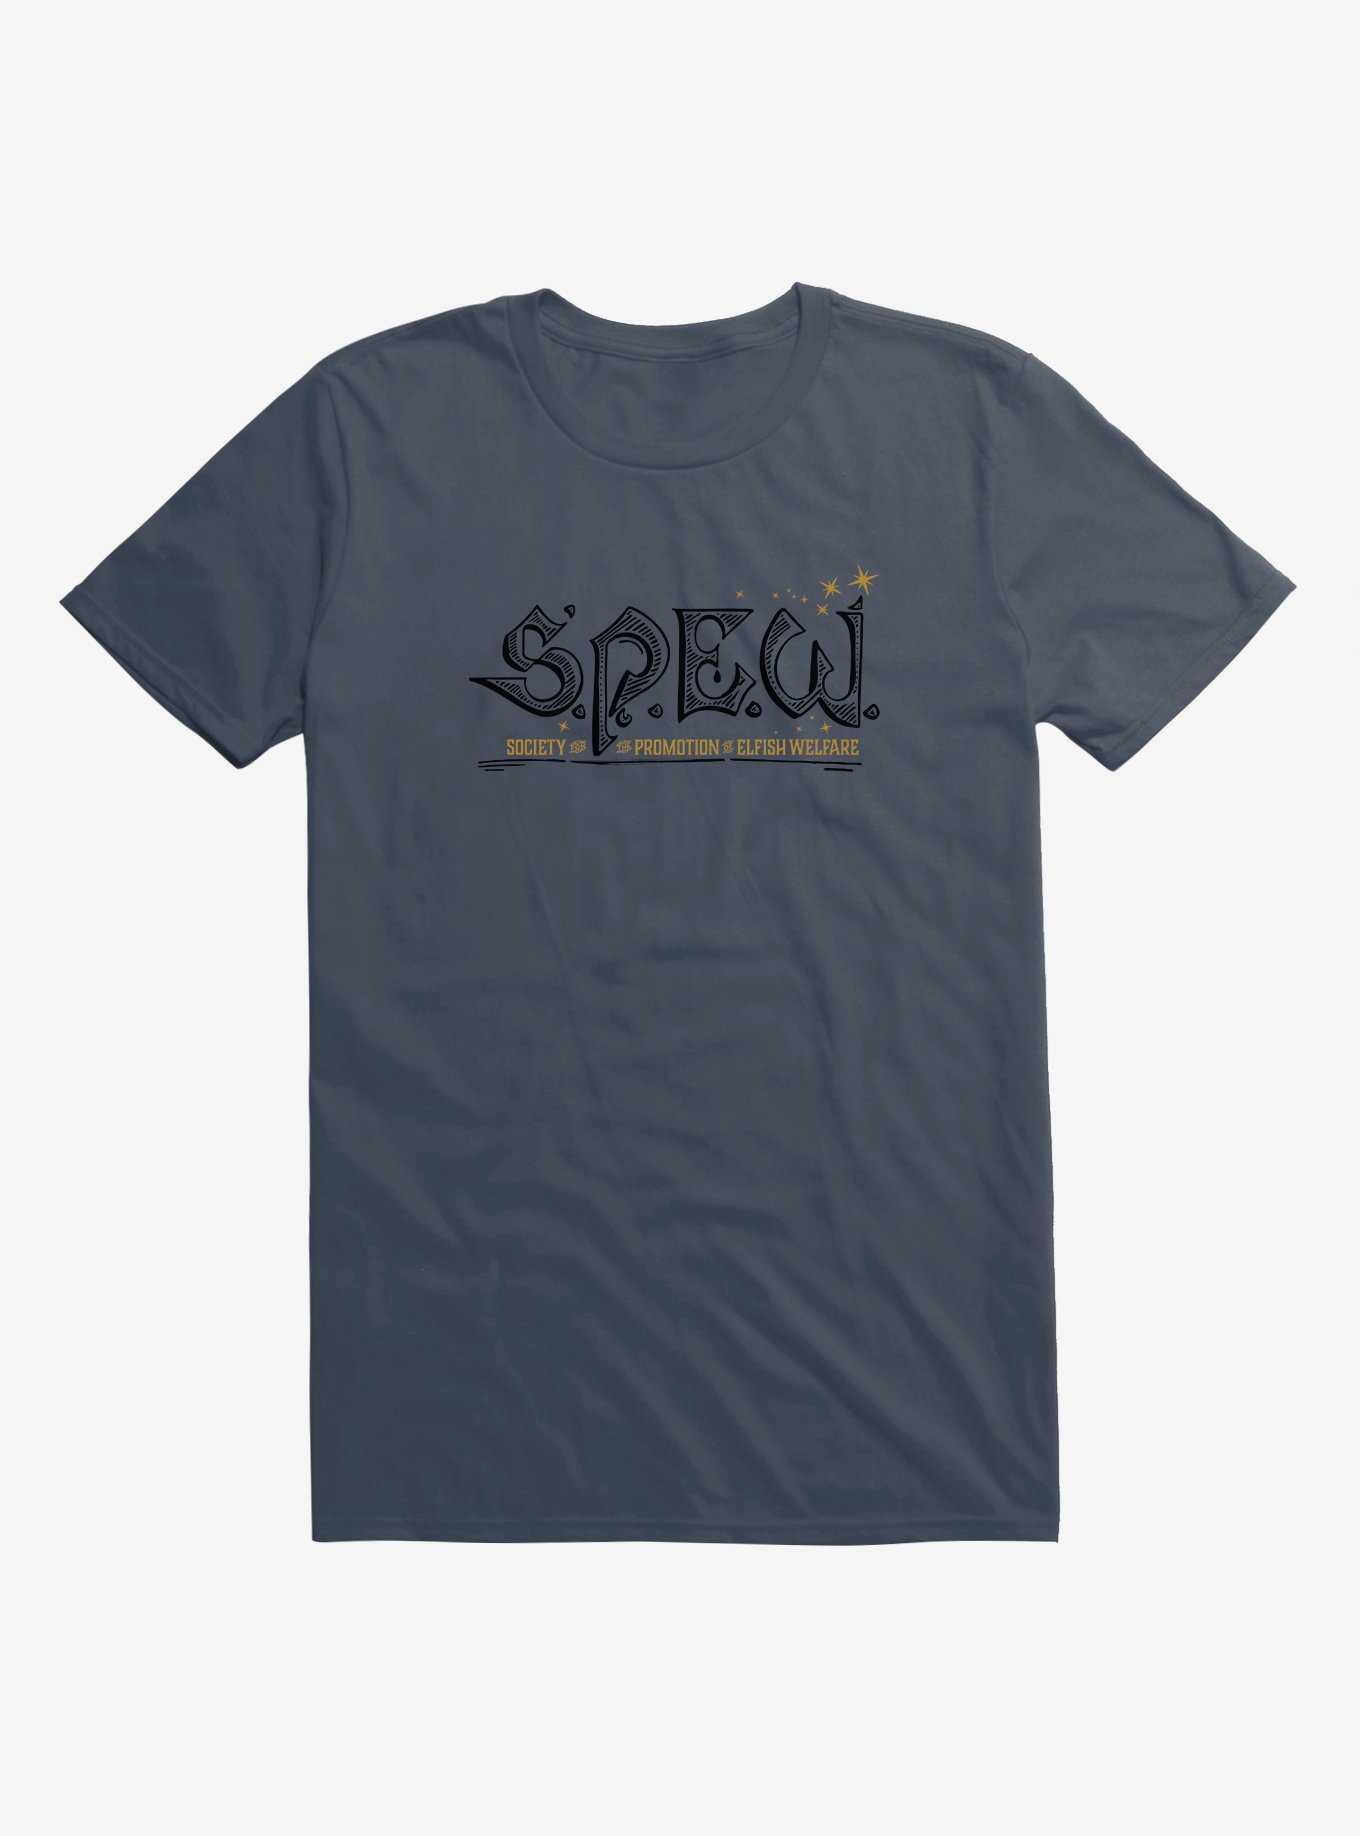 Harry Potter SPEW Organization T-Shirt, , hi-res